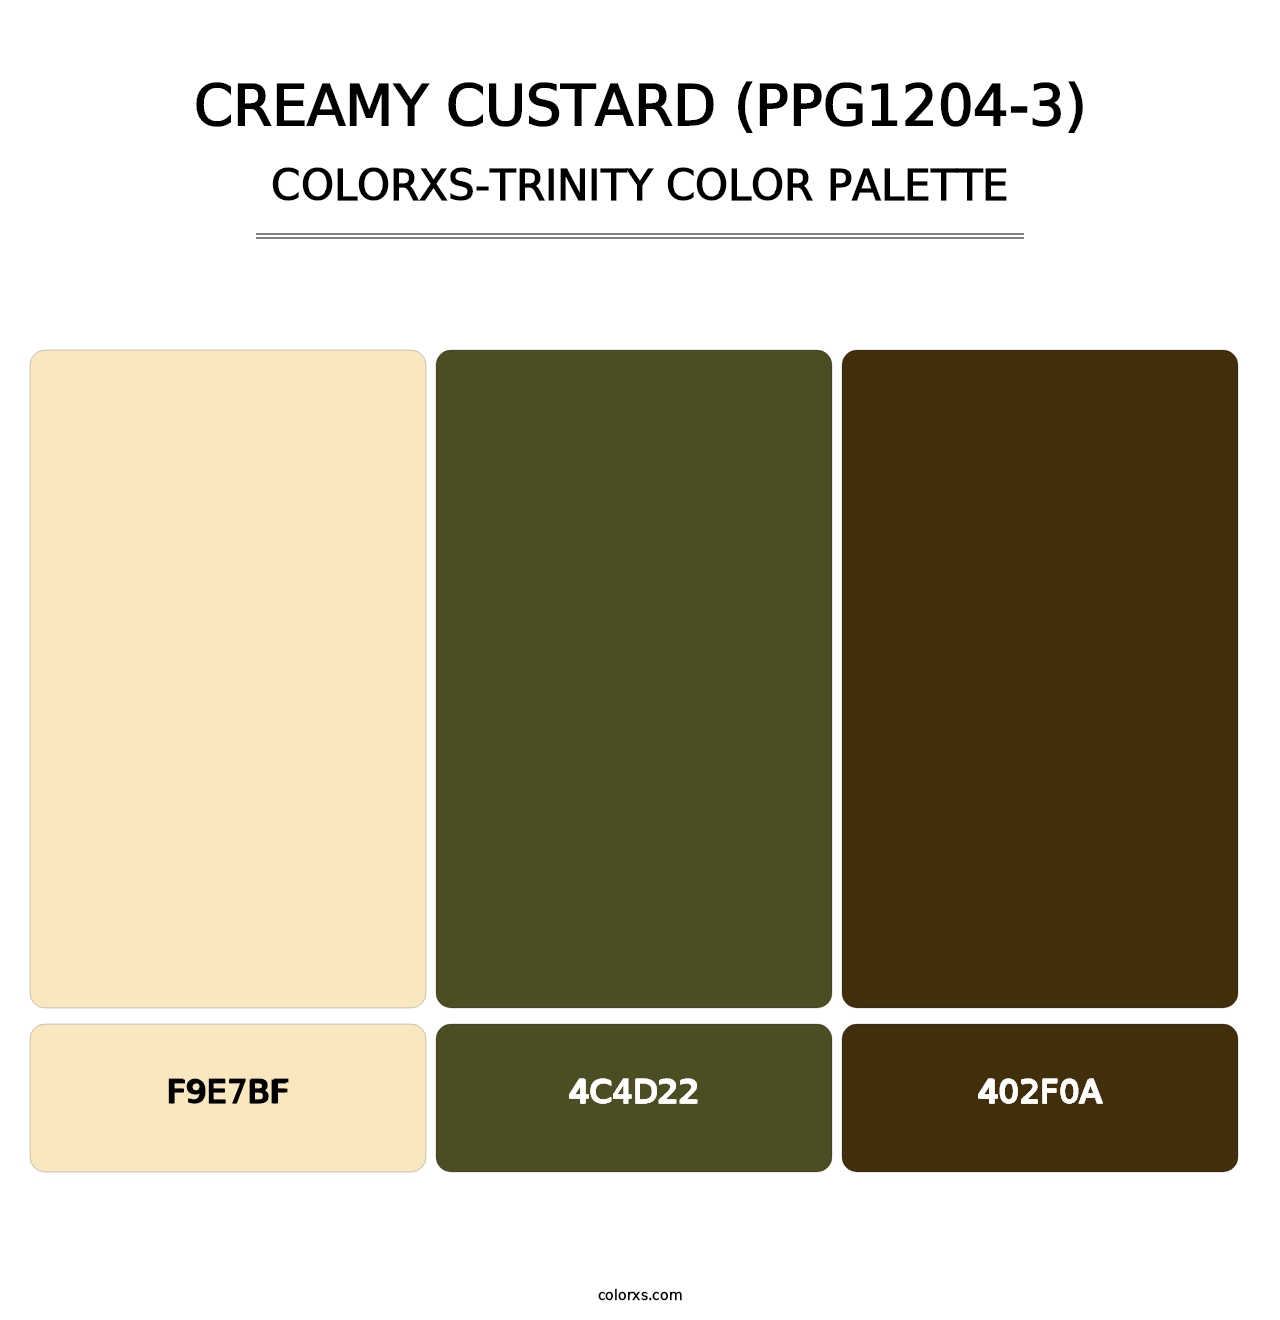 Creamy Custard (PPG1204-3) - Colorxs Trinity Palette